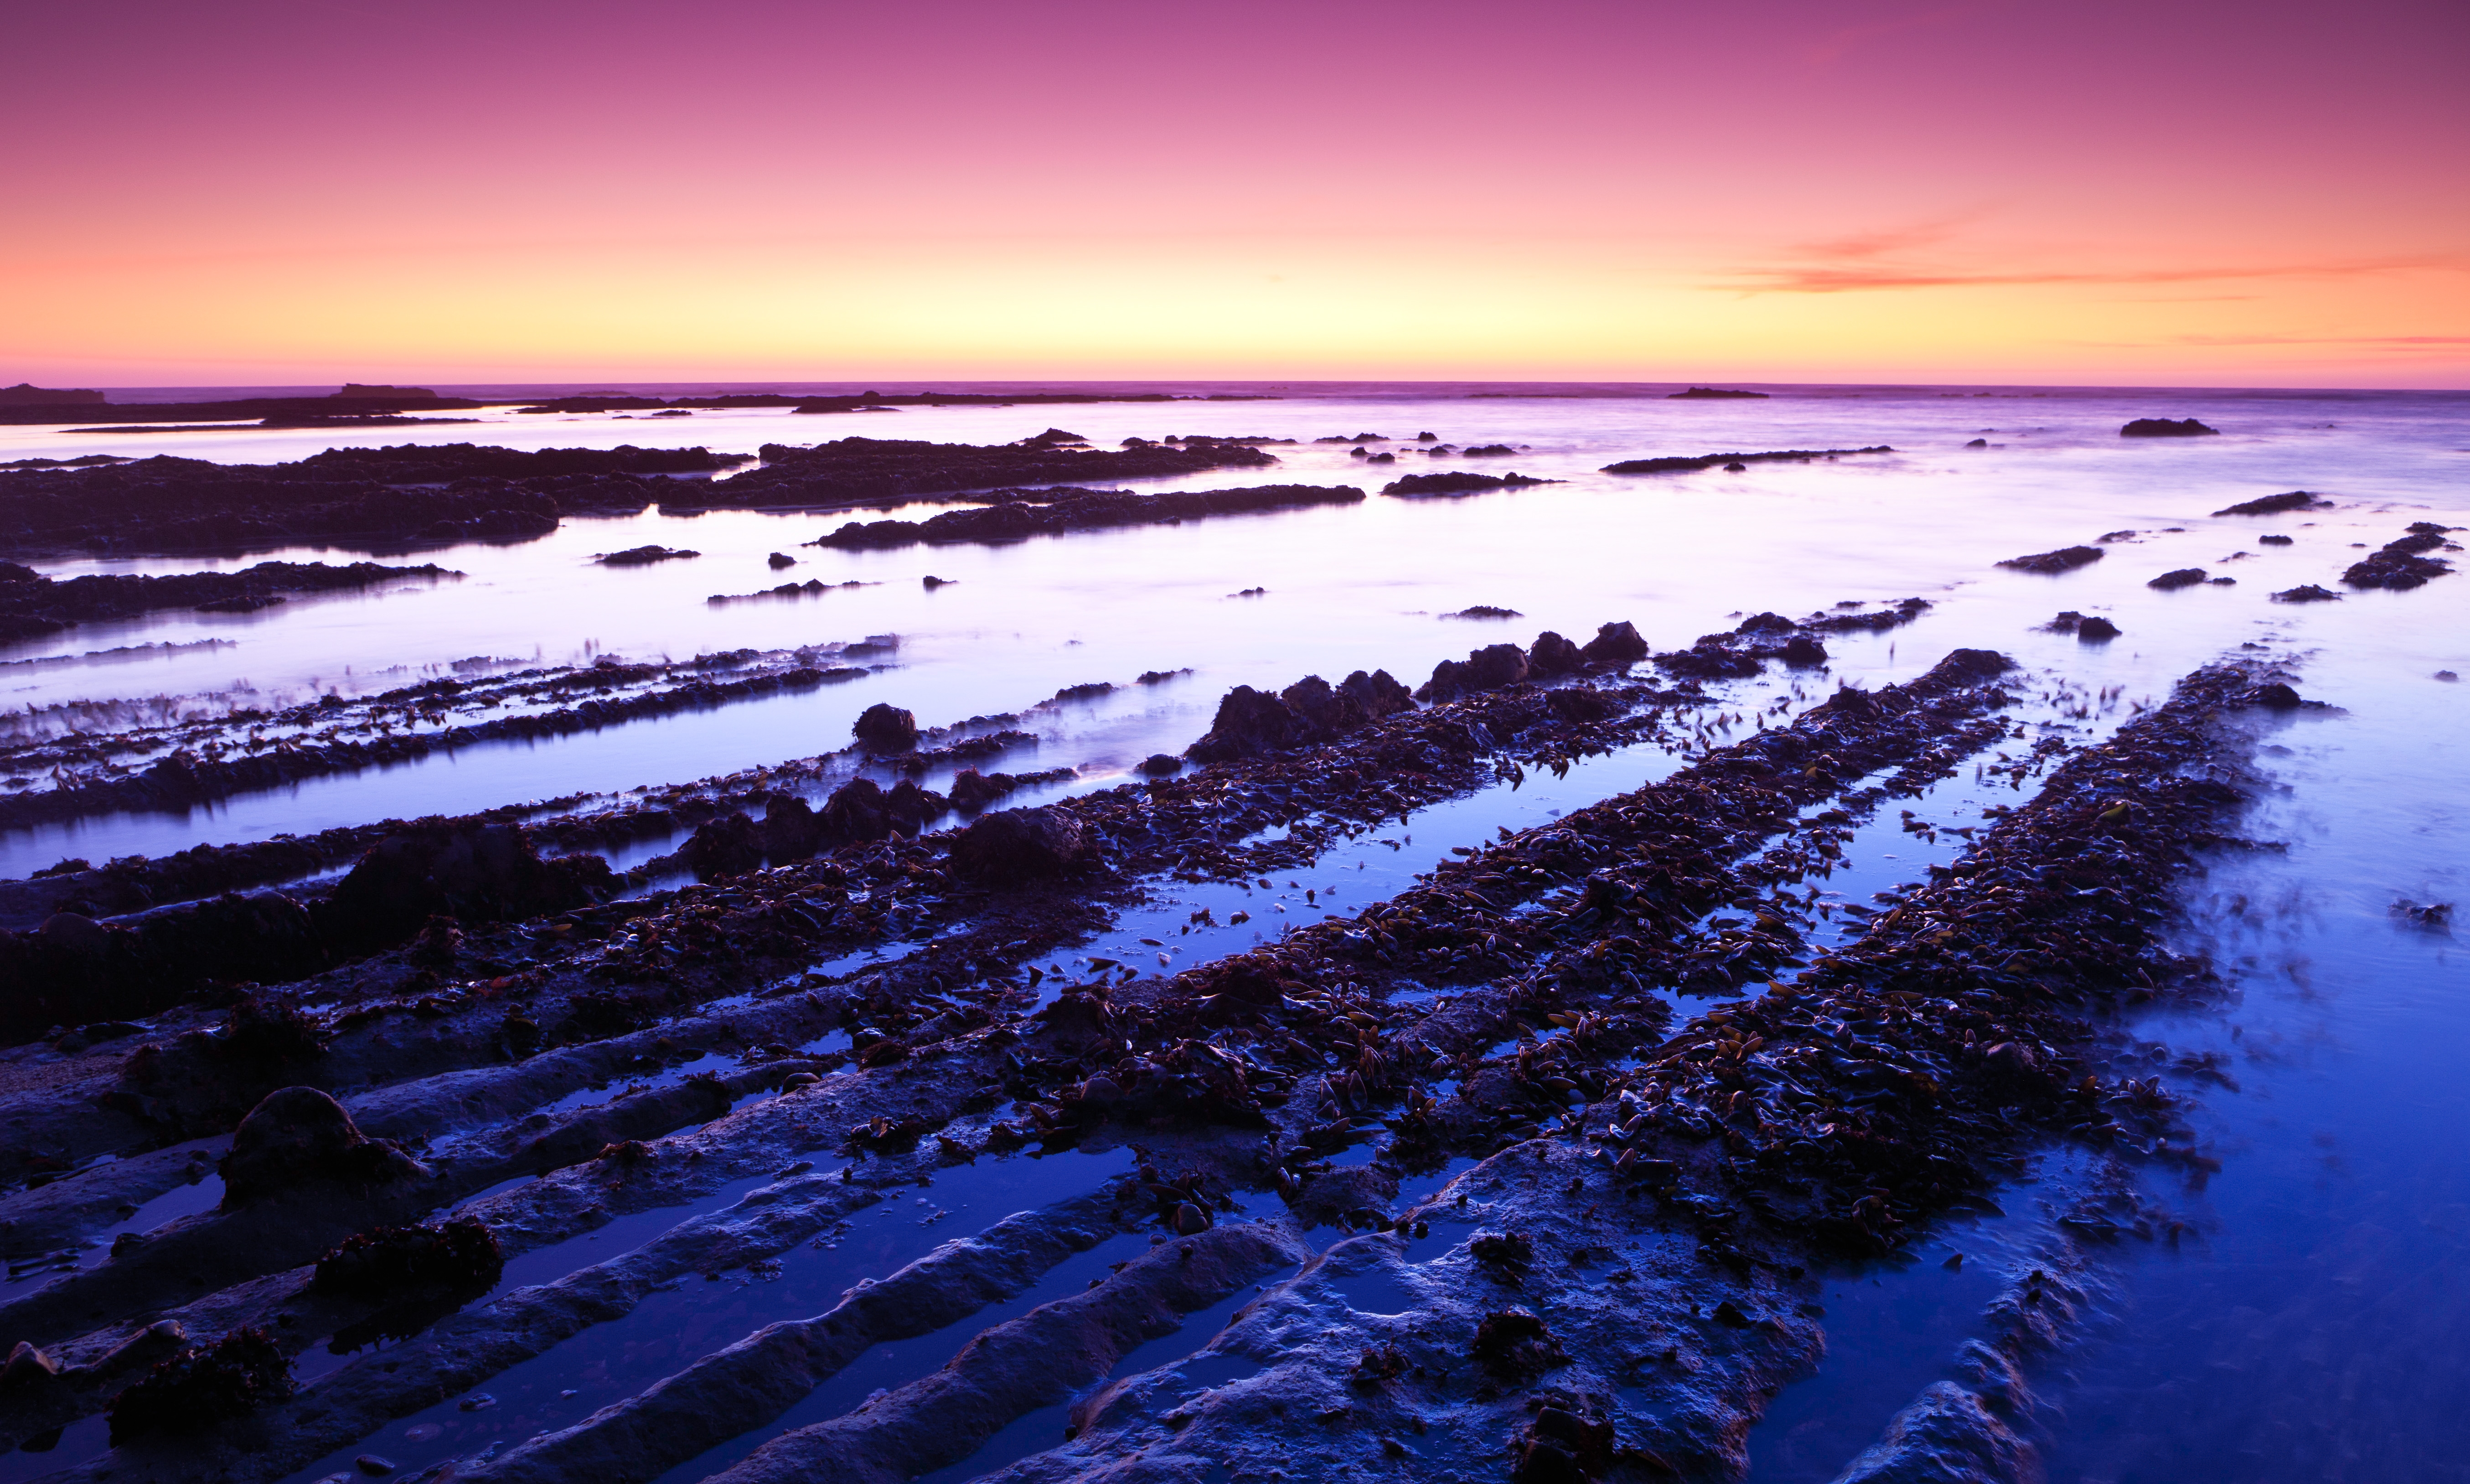 HD wallpaper, California, Body Of Water, Rocks, Horizon, Sunset, Purple Sky, Seascape, Landscape, 5K, Usa, Fitzgerald Marine Reserve, Moss Beach, Clear Sky